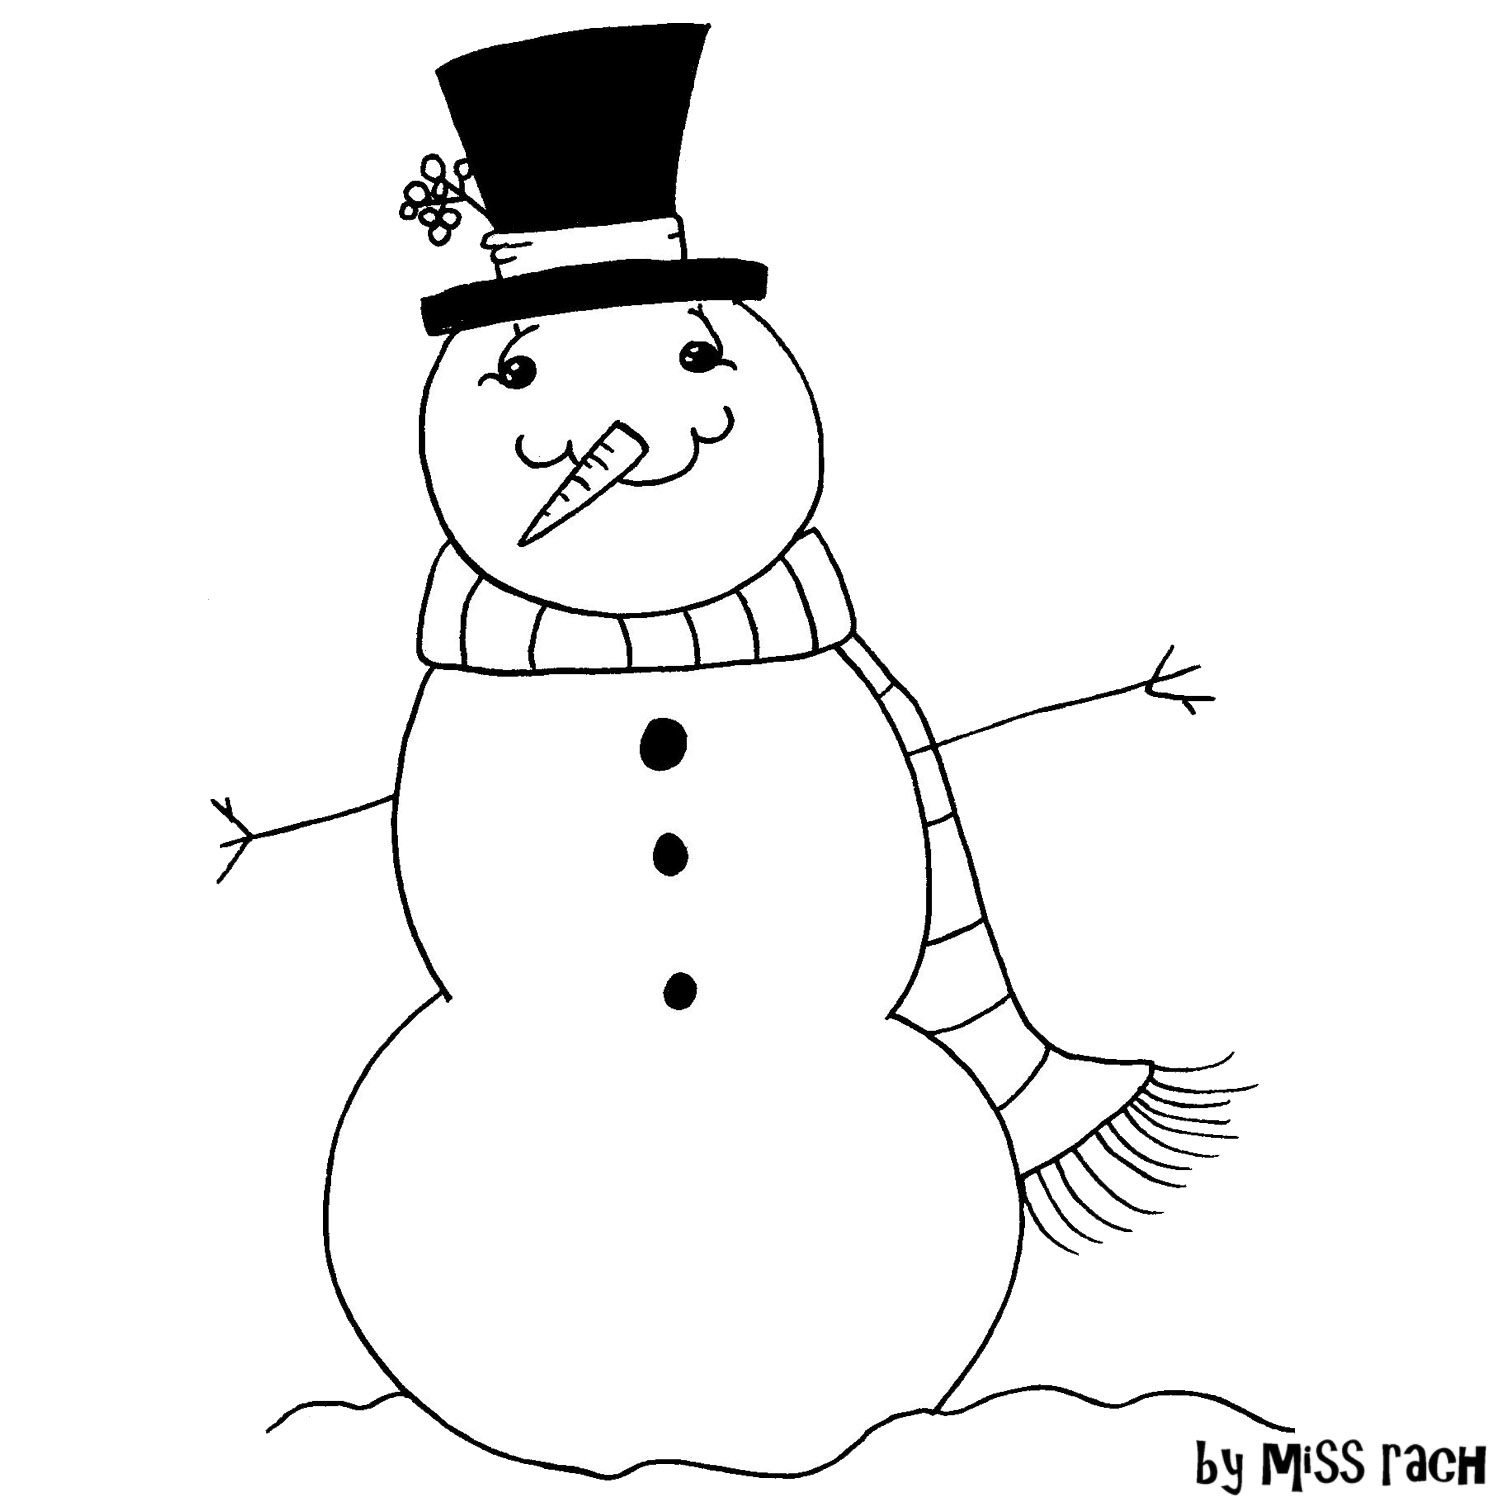 http://3.bp.blogspot.com/-B6MDxjojGn8/VFqylbZ3LqI/AAAAAAAAGGg/rAbK83fHXzY/s1600/snowman%2B2014.jpg